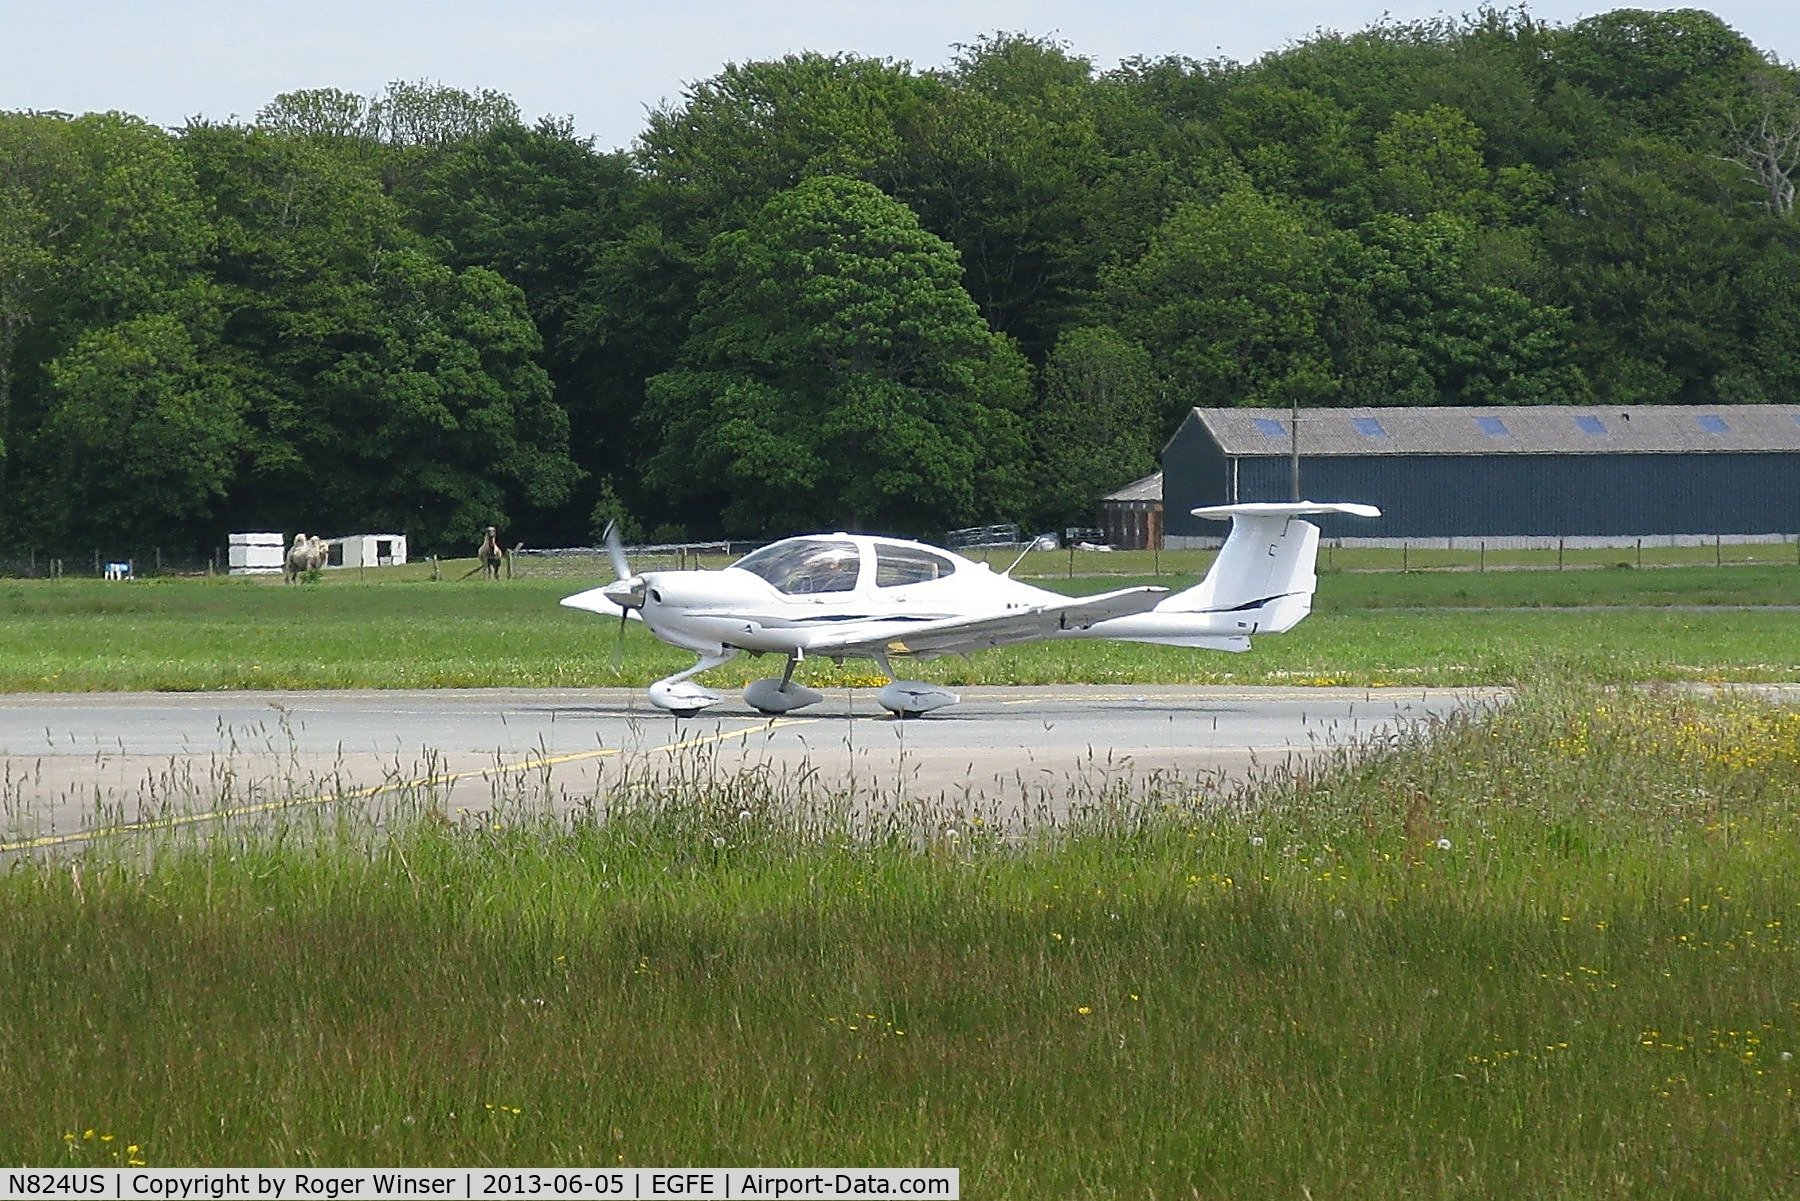 N824US, 2007 Diamond DA-40 Diamond Star C/N 40.824, Visiting DA 40 taxying to the pumps after landing on Runway 22.